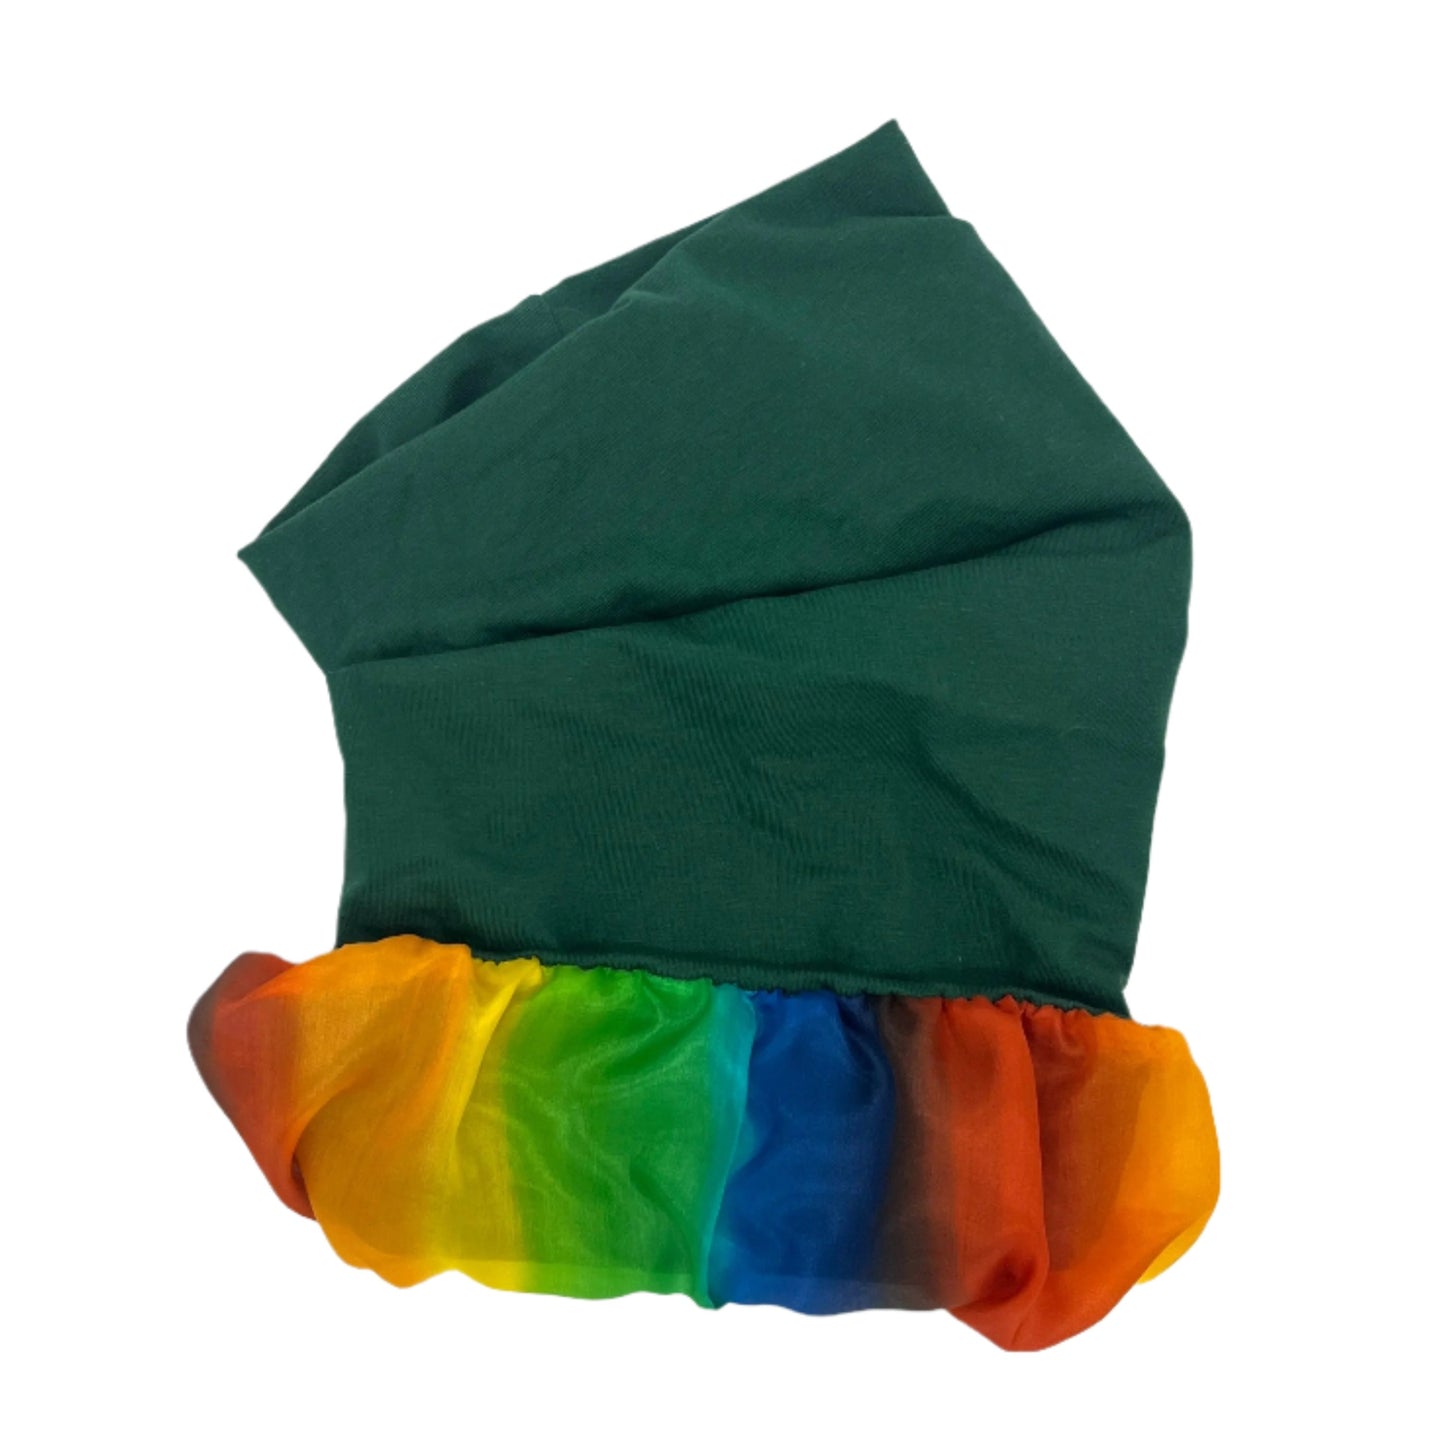 Bottle green and multicoloured rainbow silk lined bamboo hair wrap SilkGenie